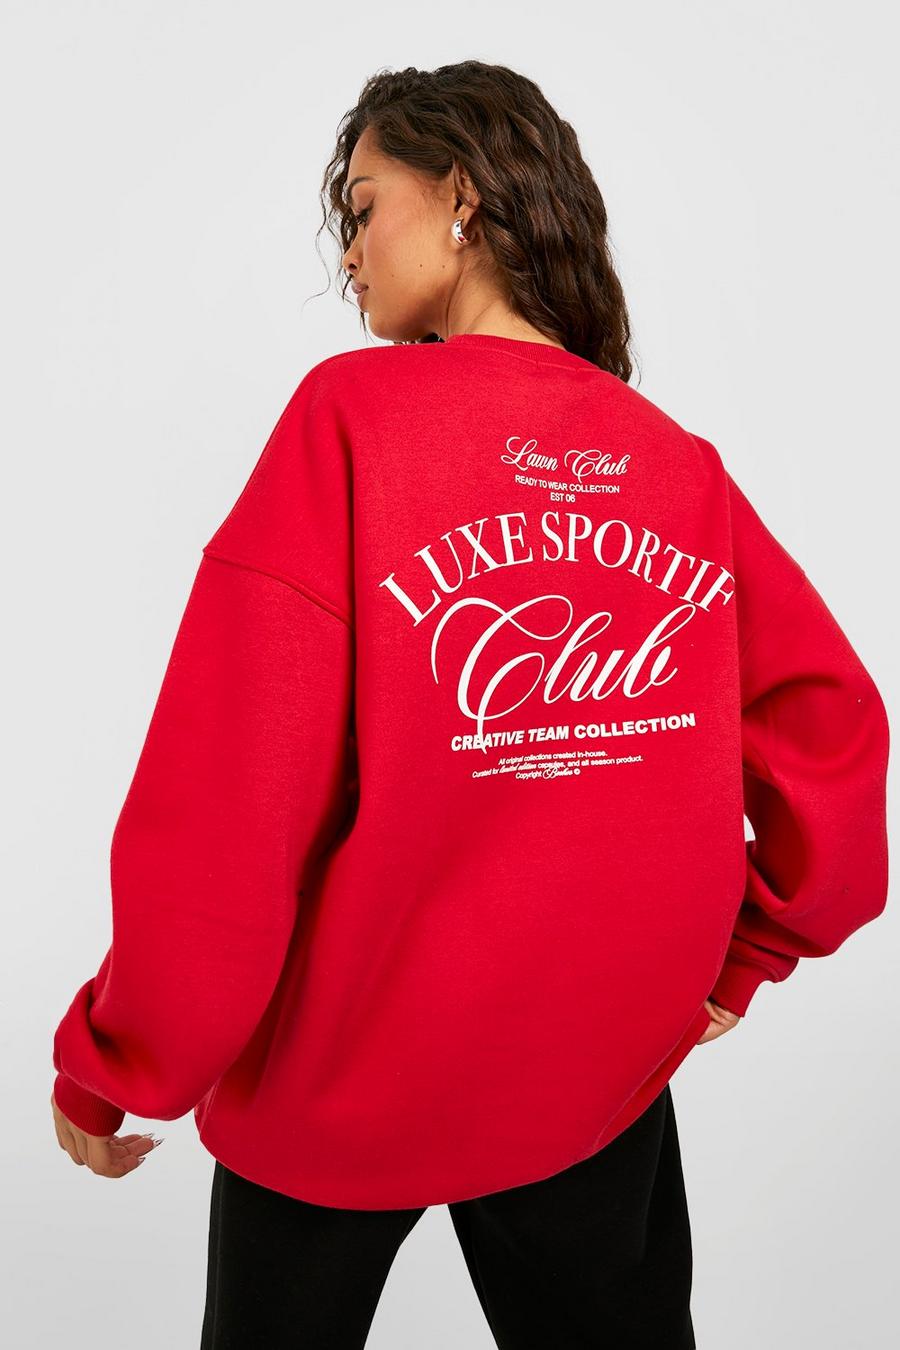 Red Sports Club Slogan Printed Sweatshirt